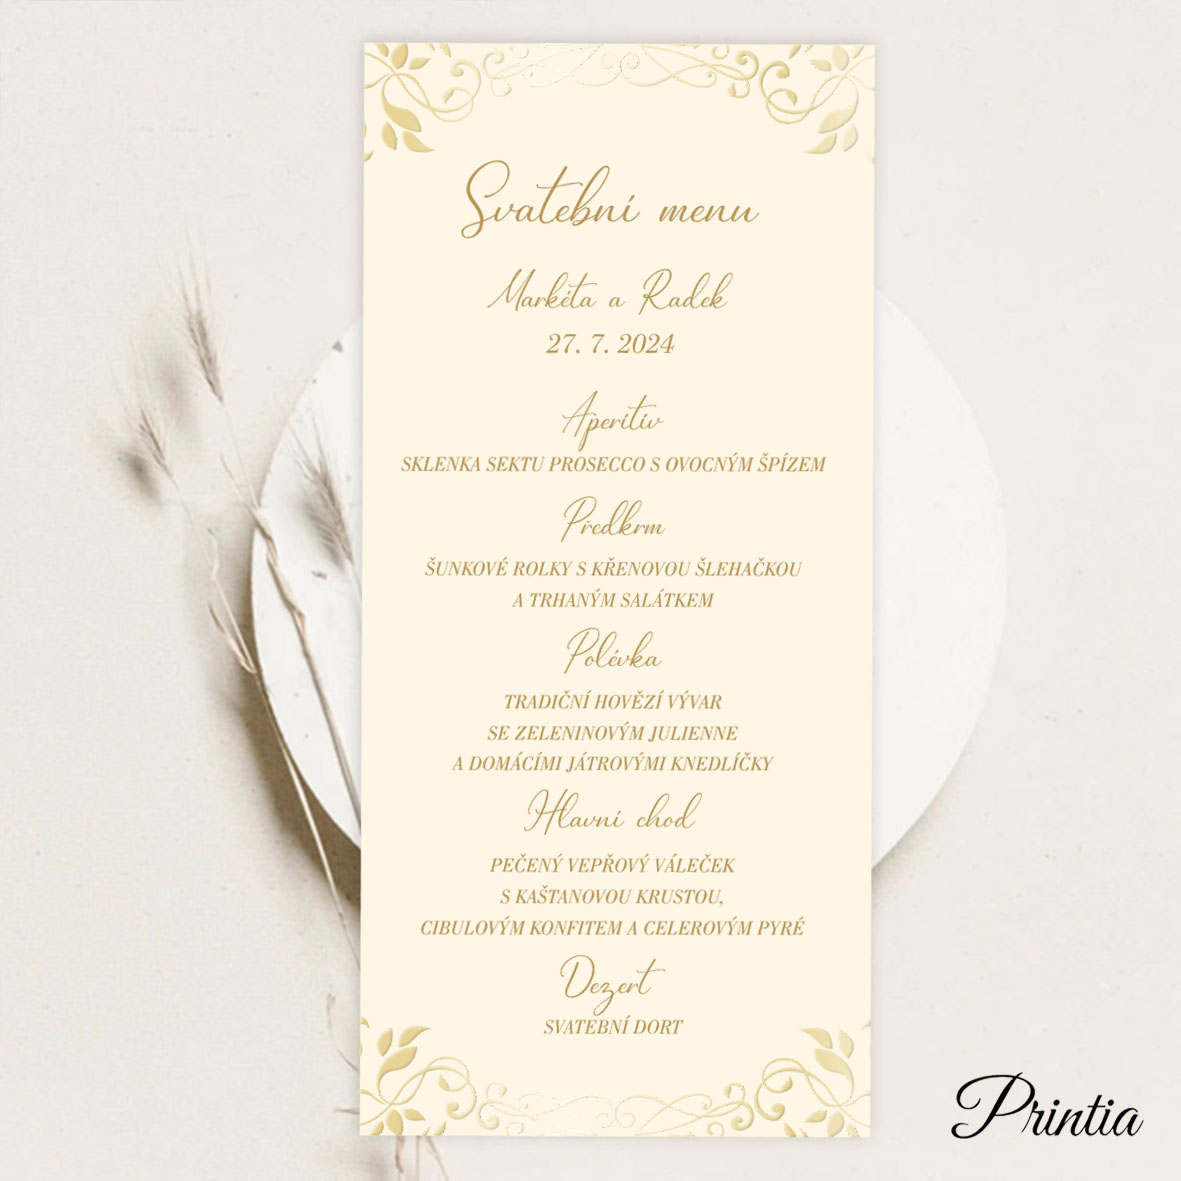 Creamy wedding menu with embossing